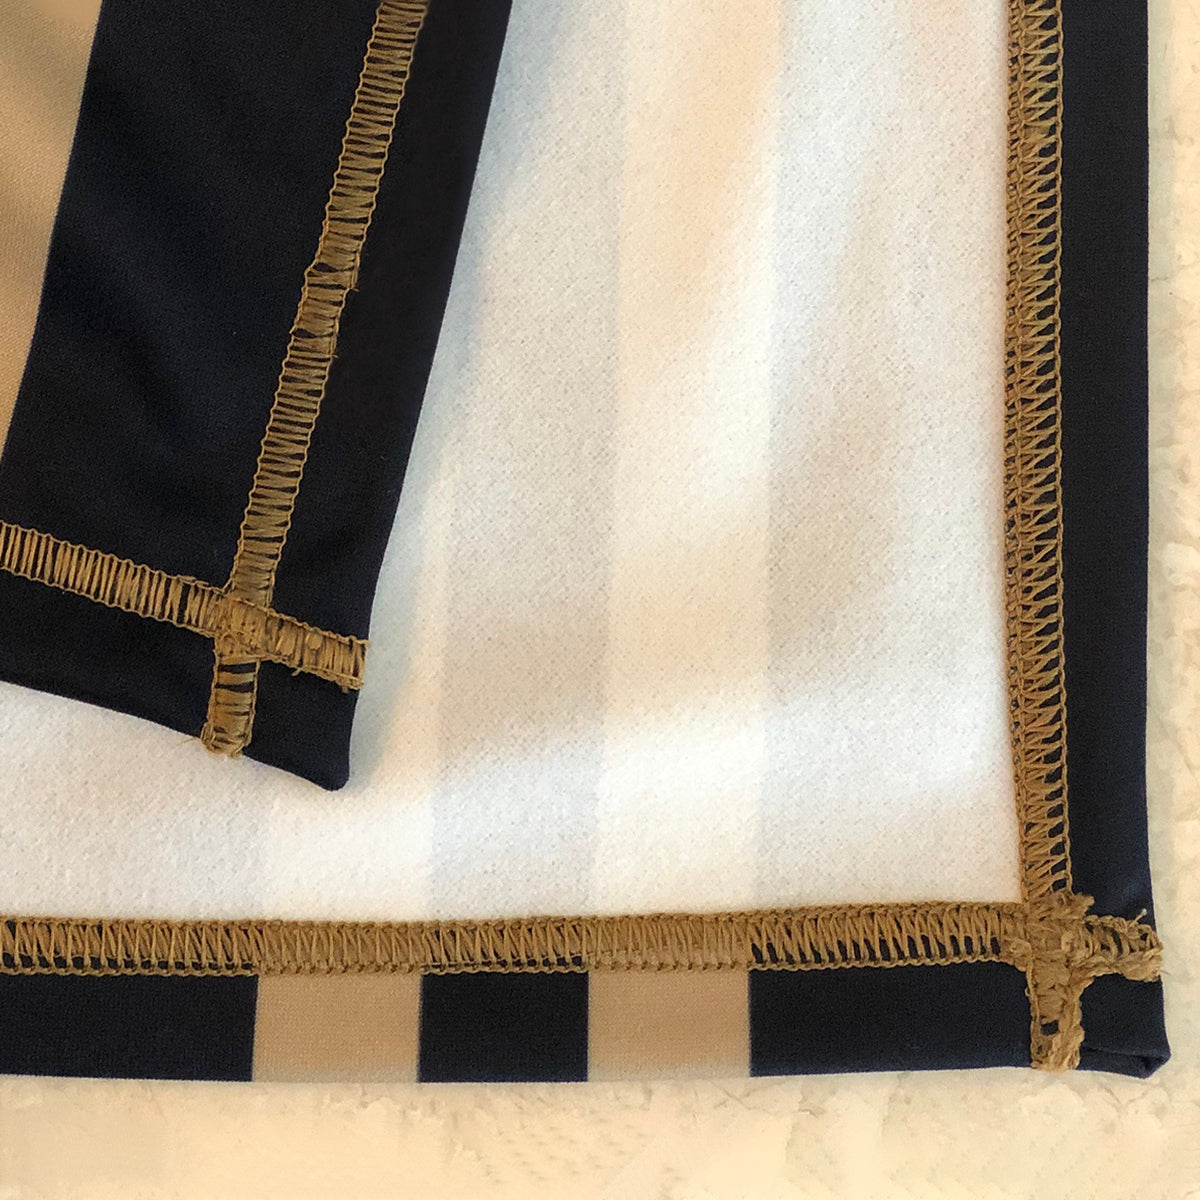 US Naval Naval Academy Game Day Soft Premium Fleece Navy Throw Blanket 40 x 58 Logo and Stripes